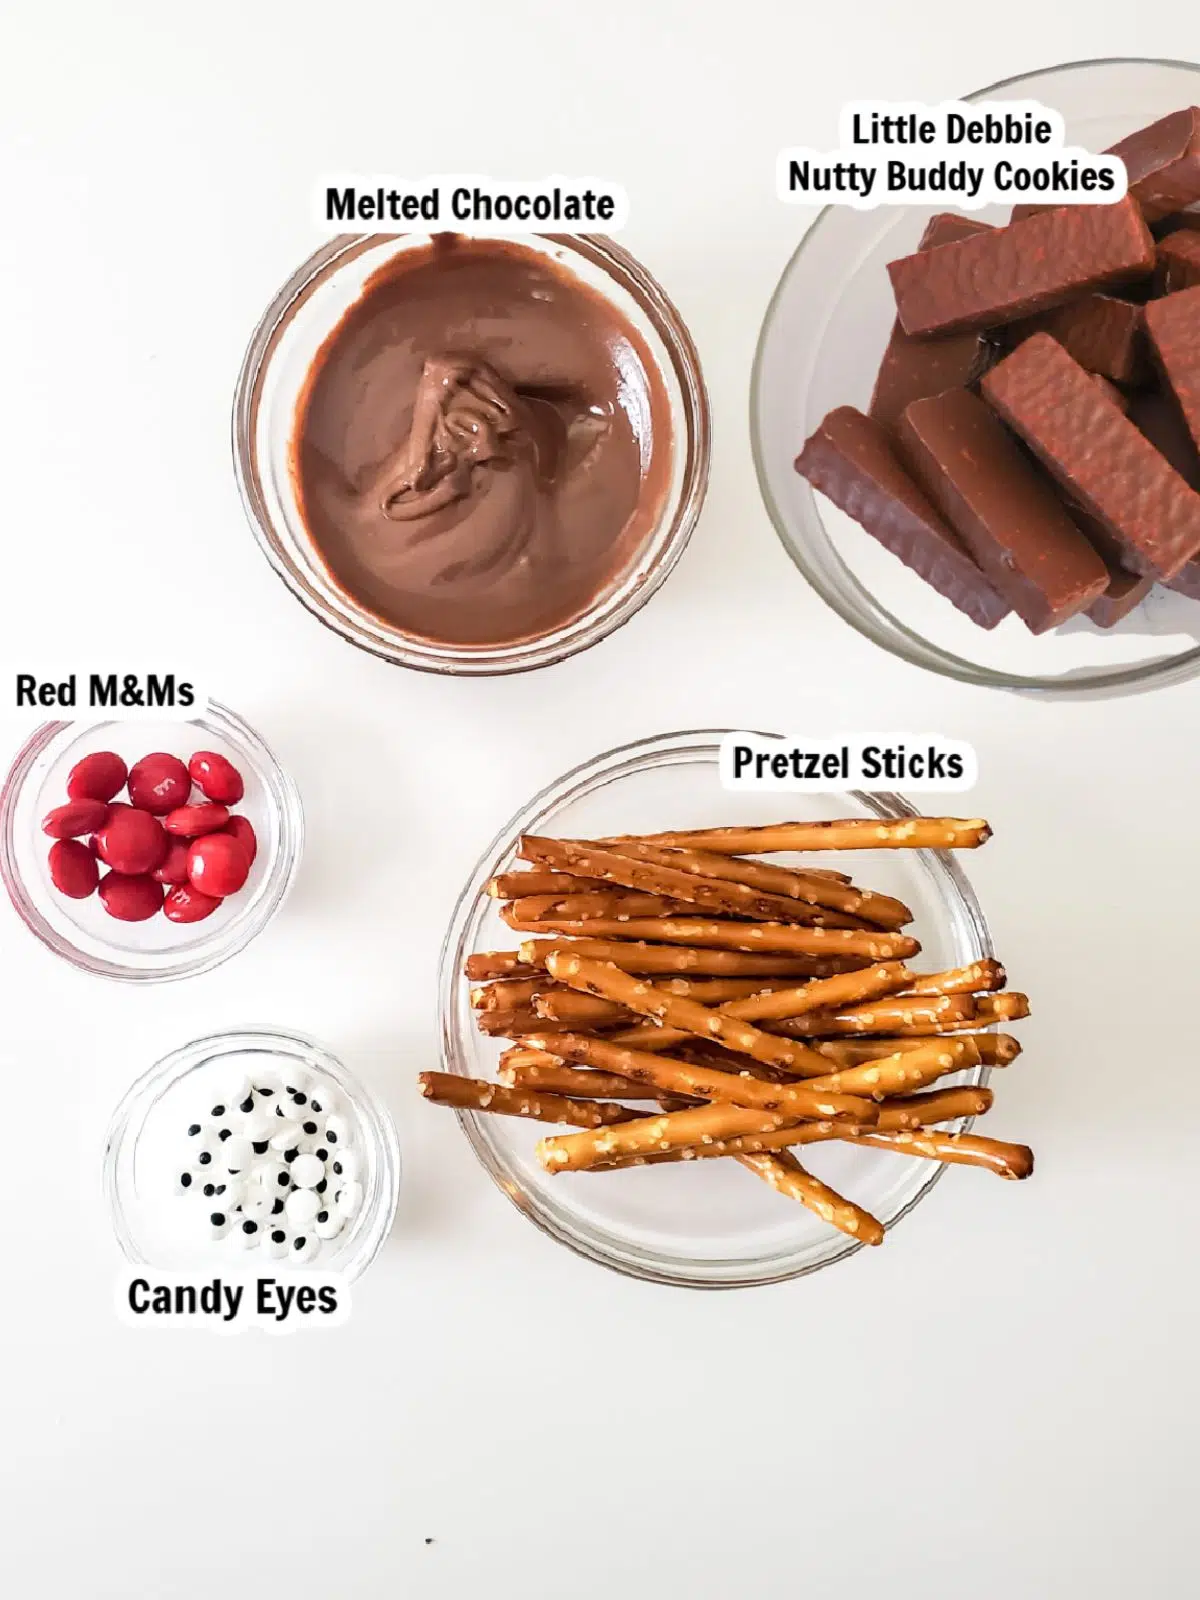 Ingredients - Little Debbie Cookies, pretzels, candy pieces.